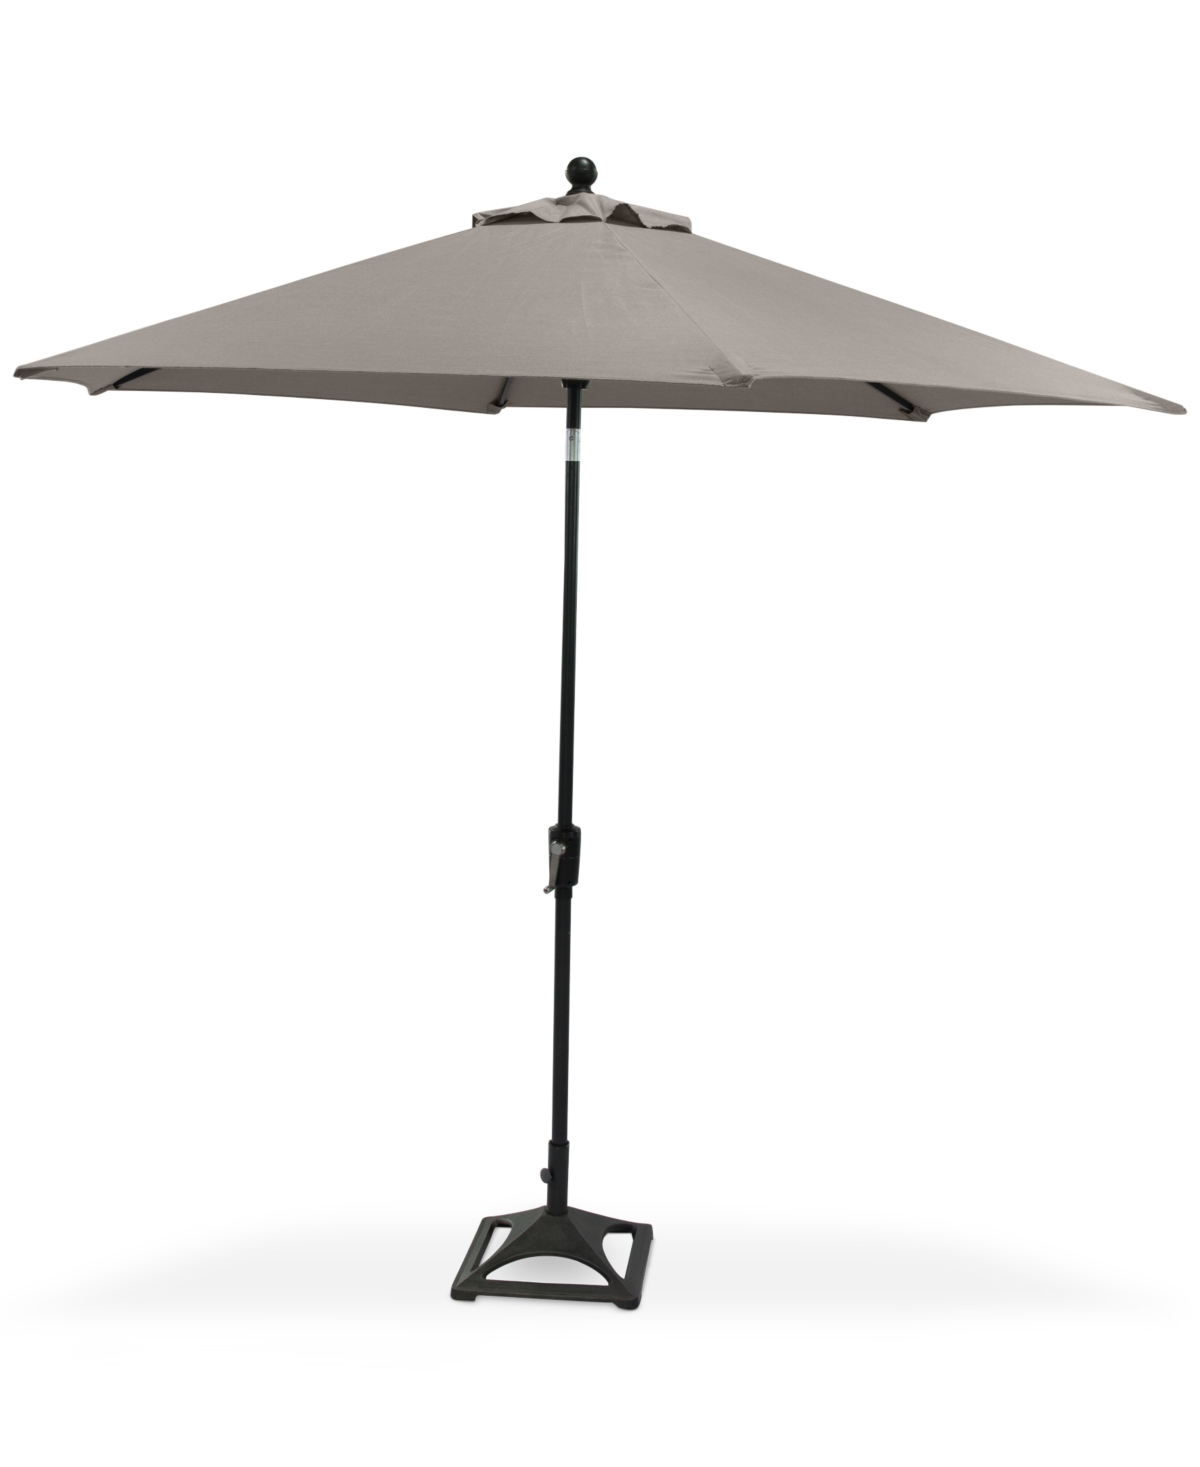 Marlough Ii Outdoor 9 Umbrella with Base, Created for Macys